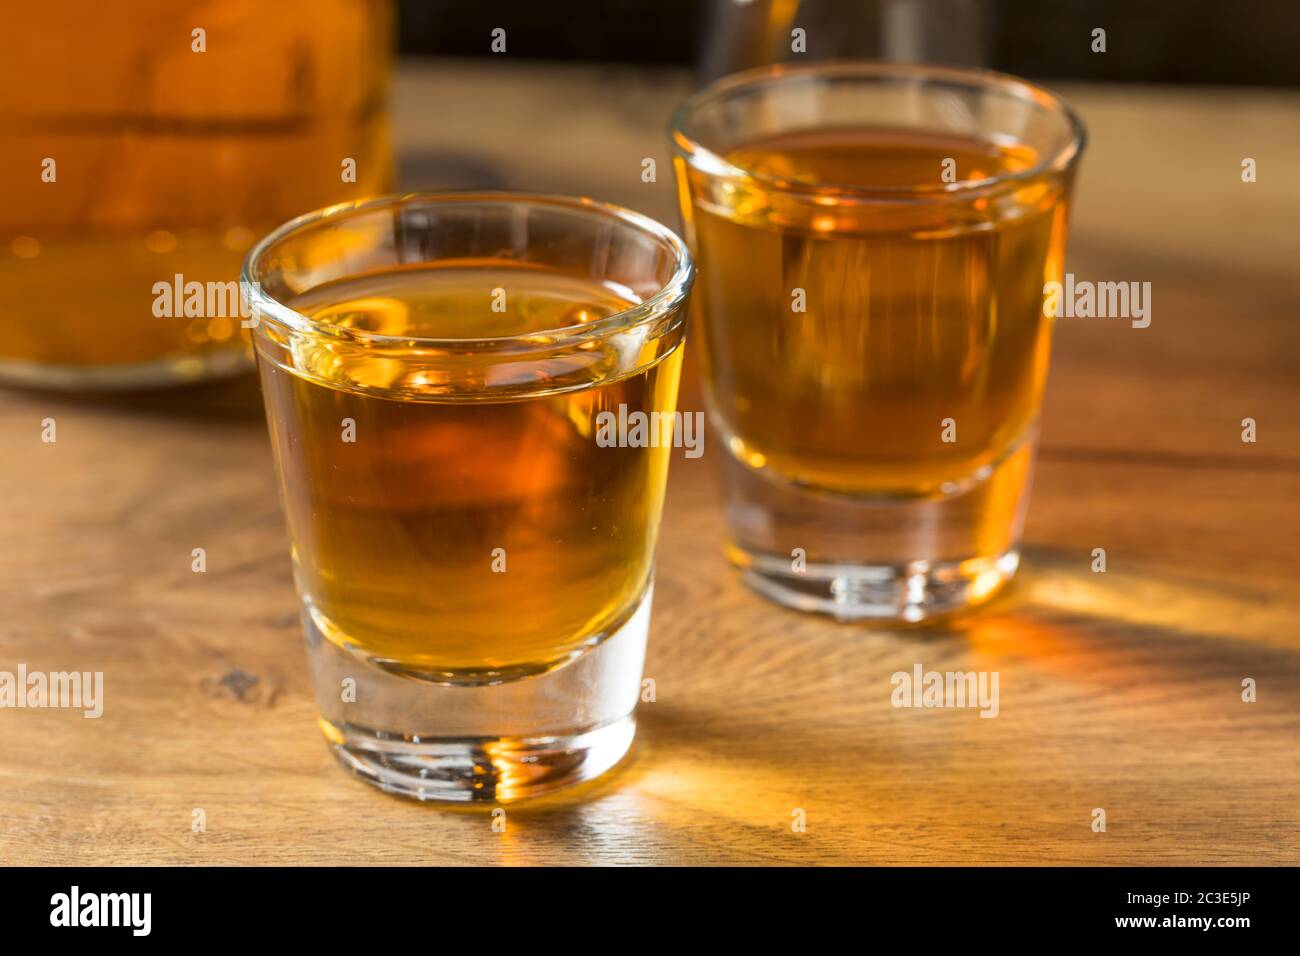 Boozy Alcoholic Rum Shots Ready to Drink Stock Photo